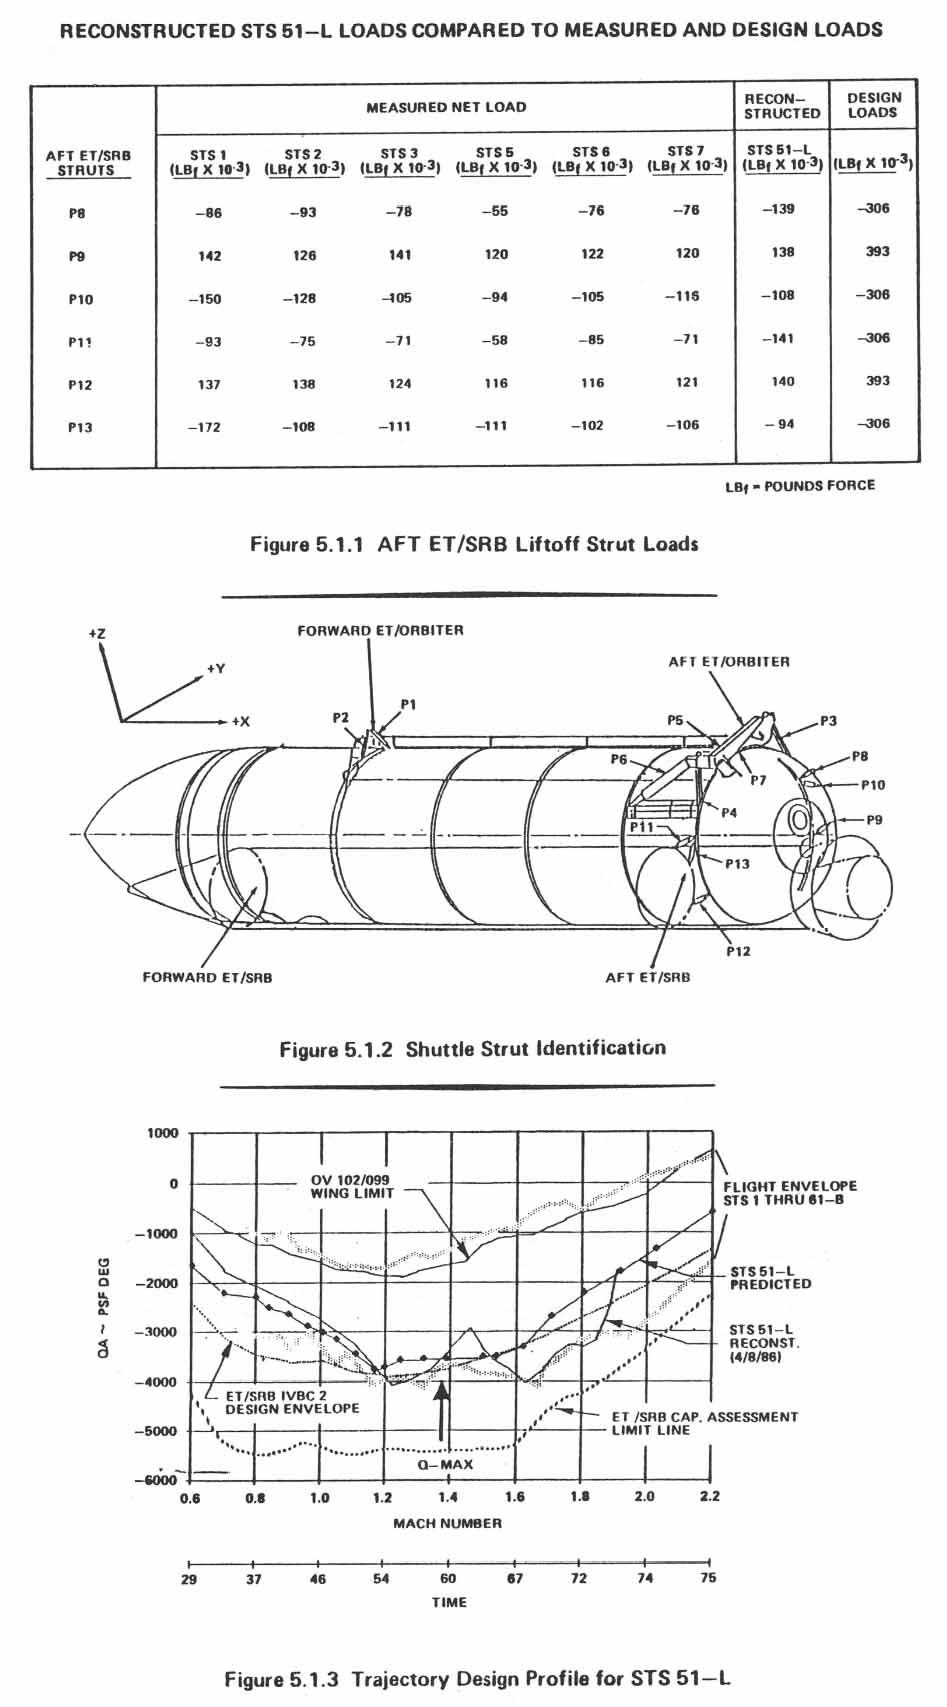 [Top to bottom] Figure 5.1.1. AFT ET/SRB Liftoff Strut Loads; Figure 5.1.2. Shuttle Strut Identification; Figure 5.1.3. Trajectory Design Profile for STS 51-L.